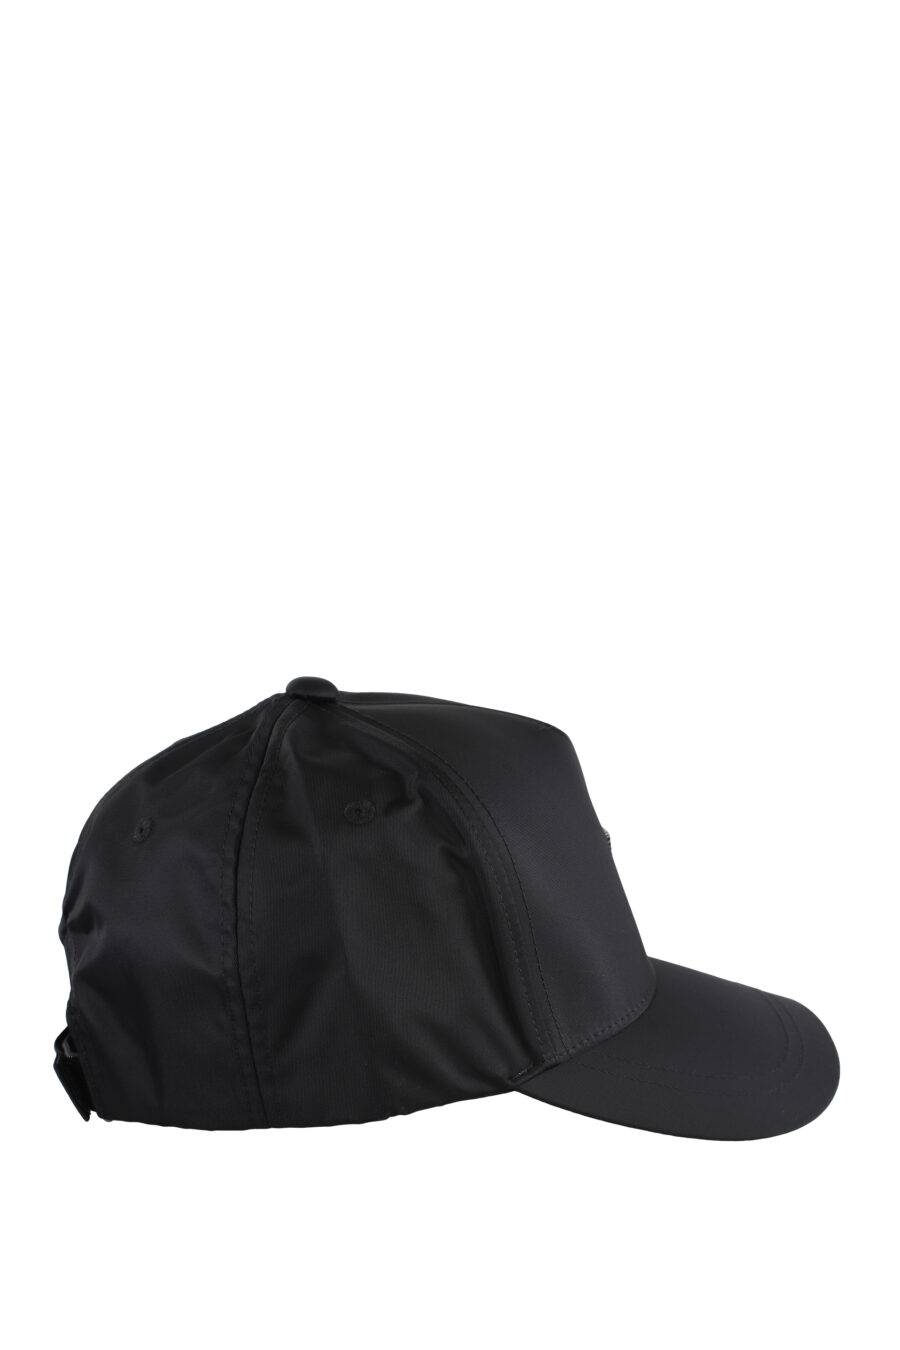 Black cap with metal eagle logo - IMG 5177